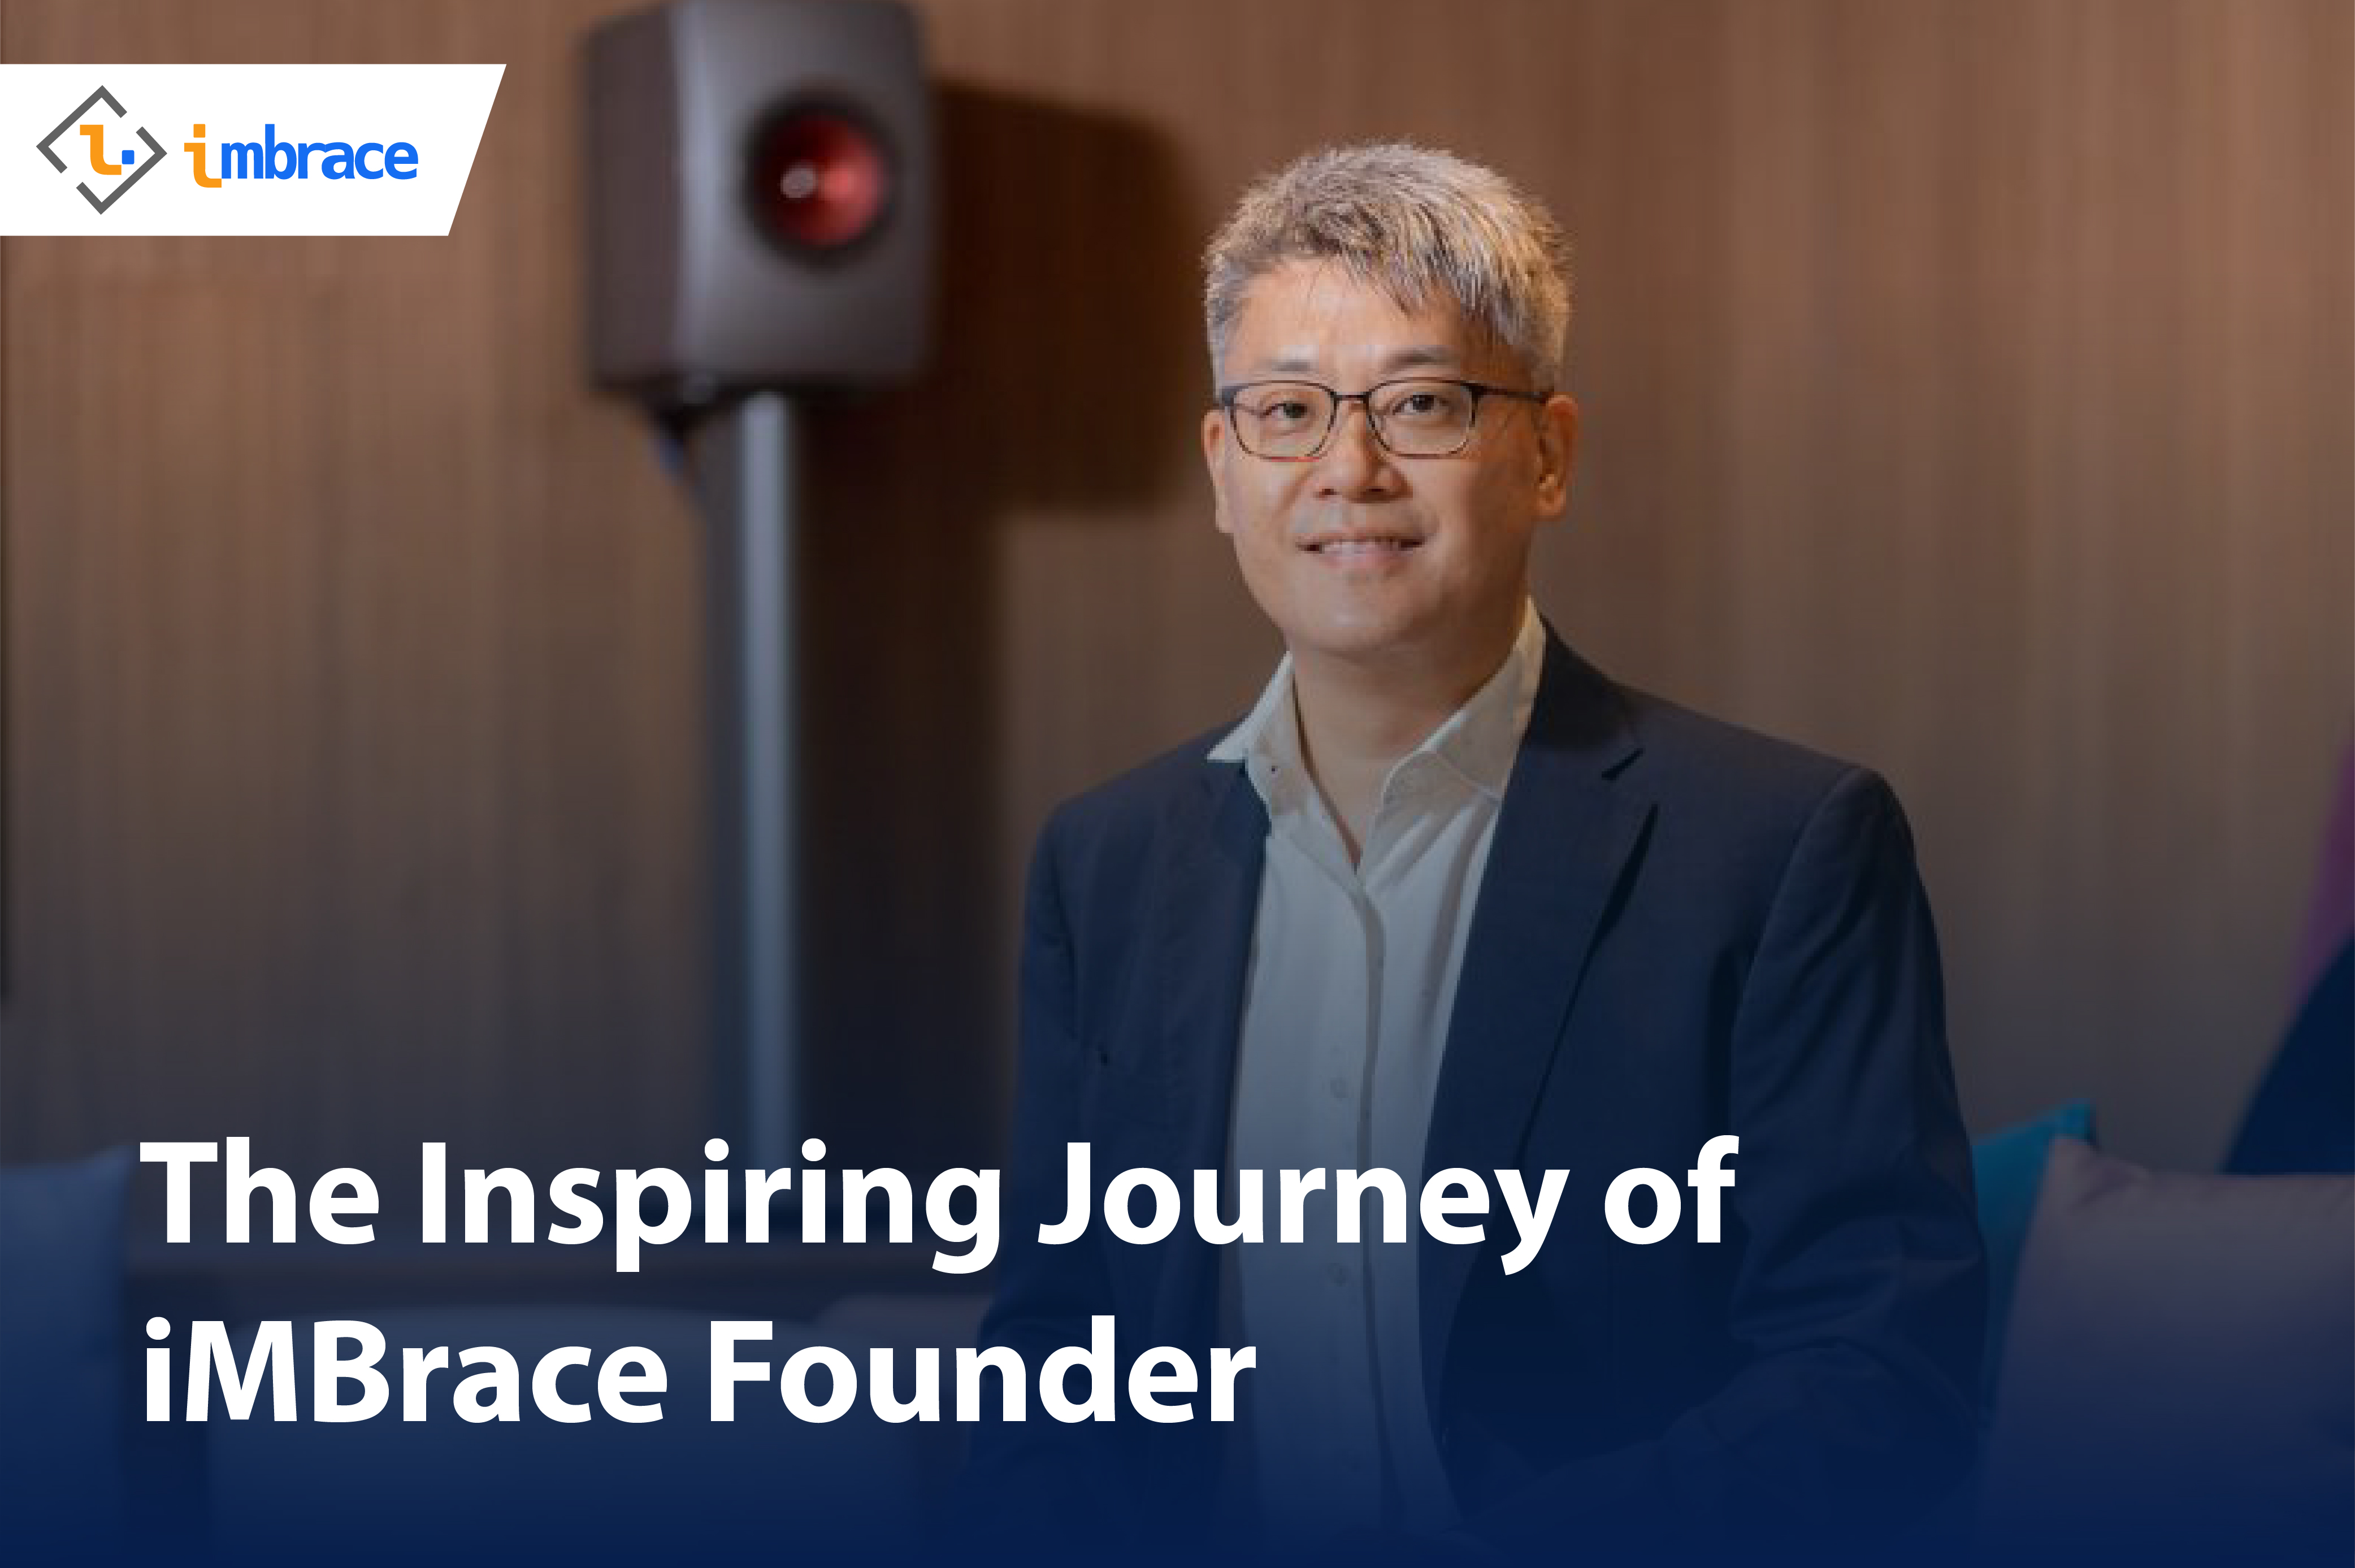 Founder of iMBrace (Simon Yeung)